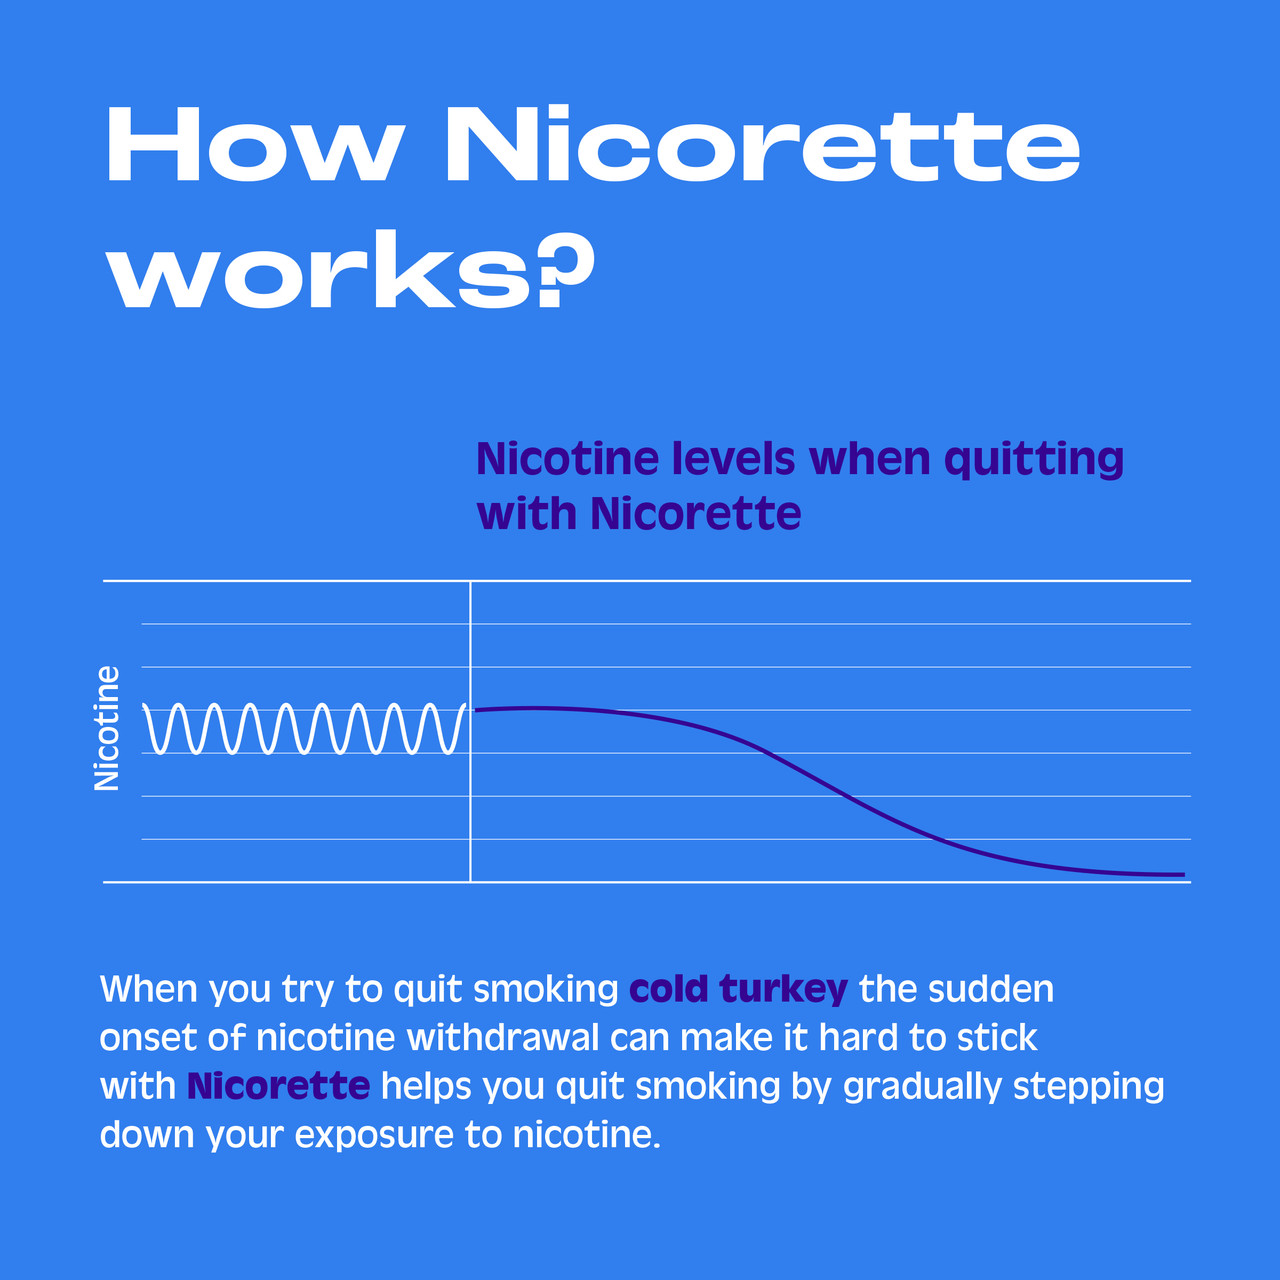 Comprar Nicorette ice mint 2 mg 30 chicles